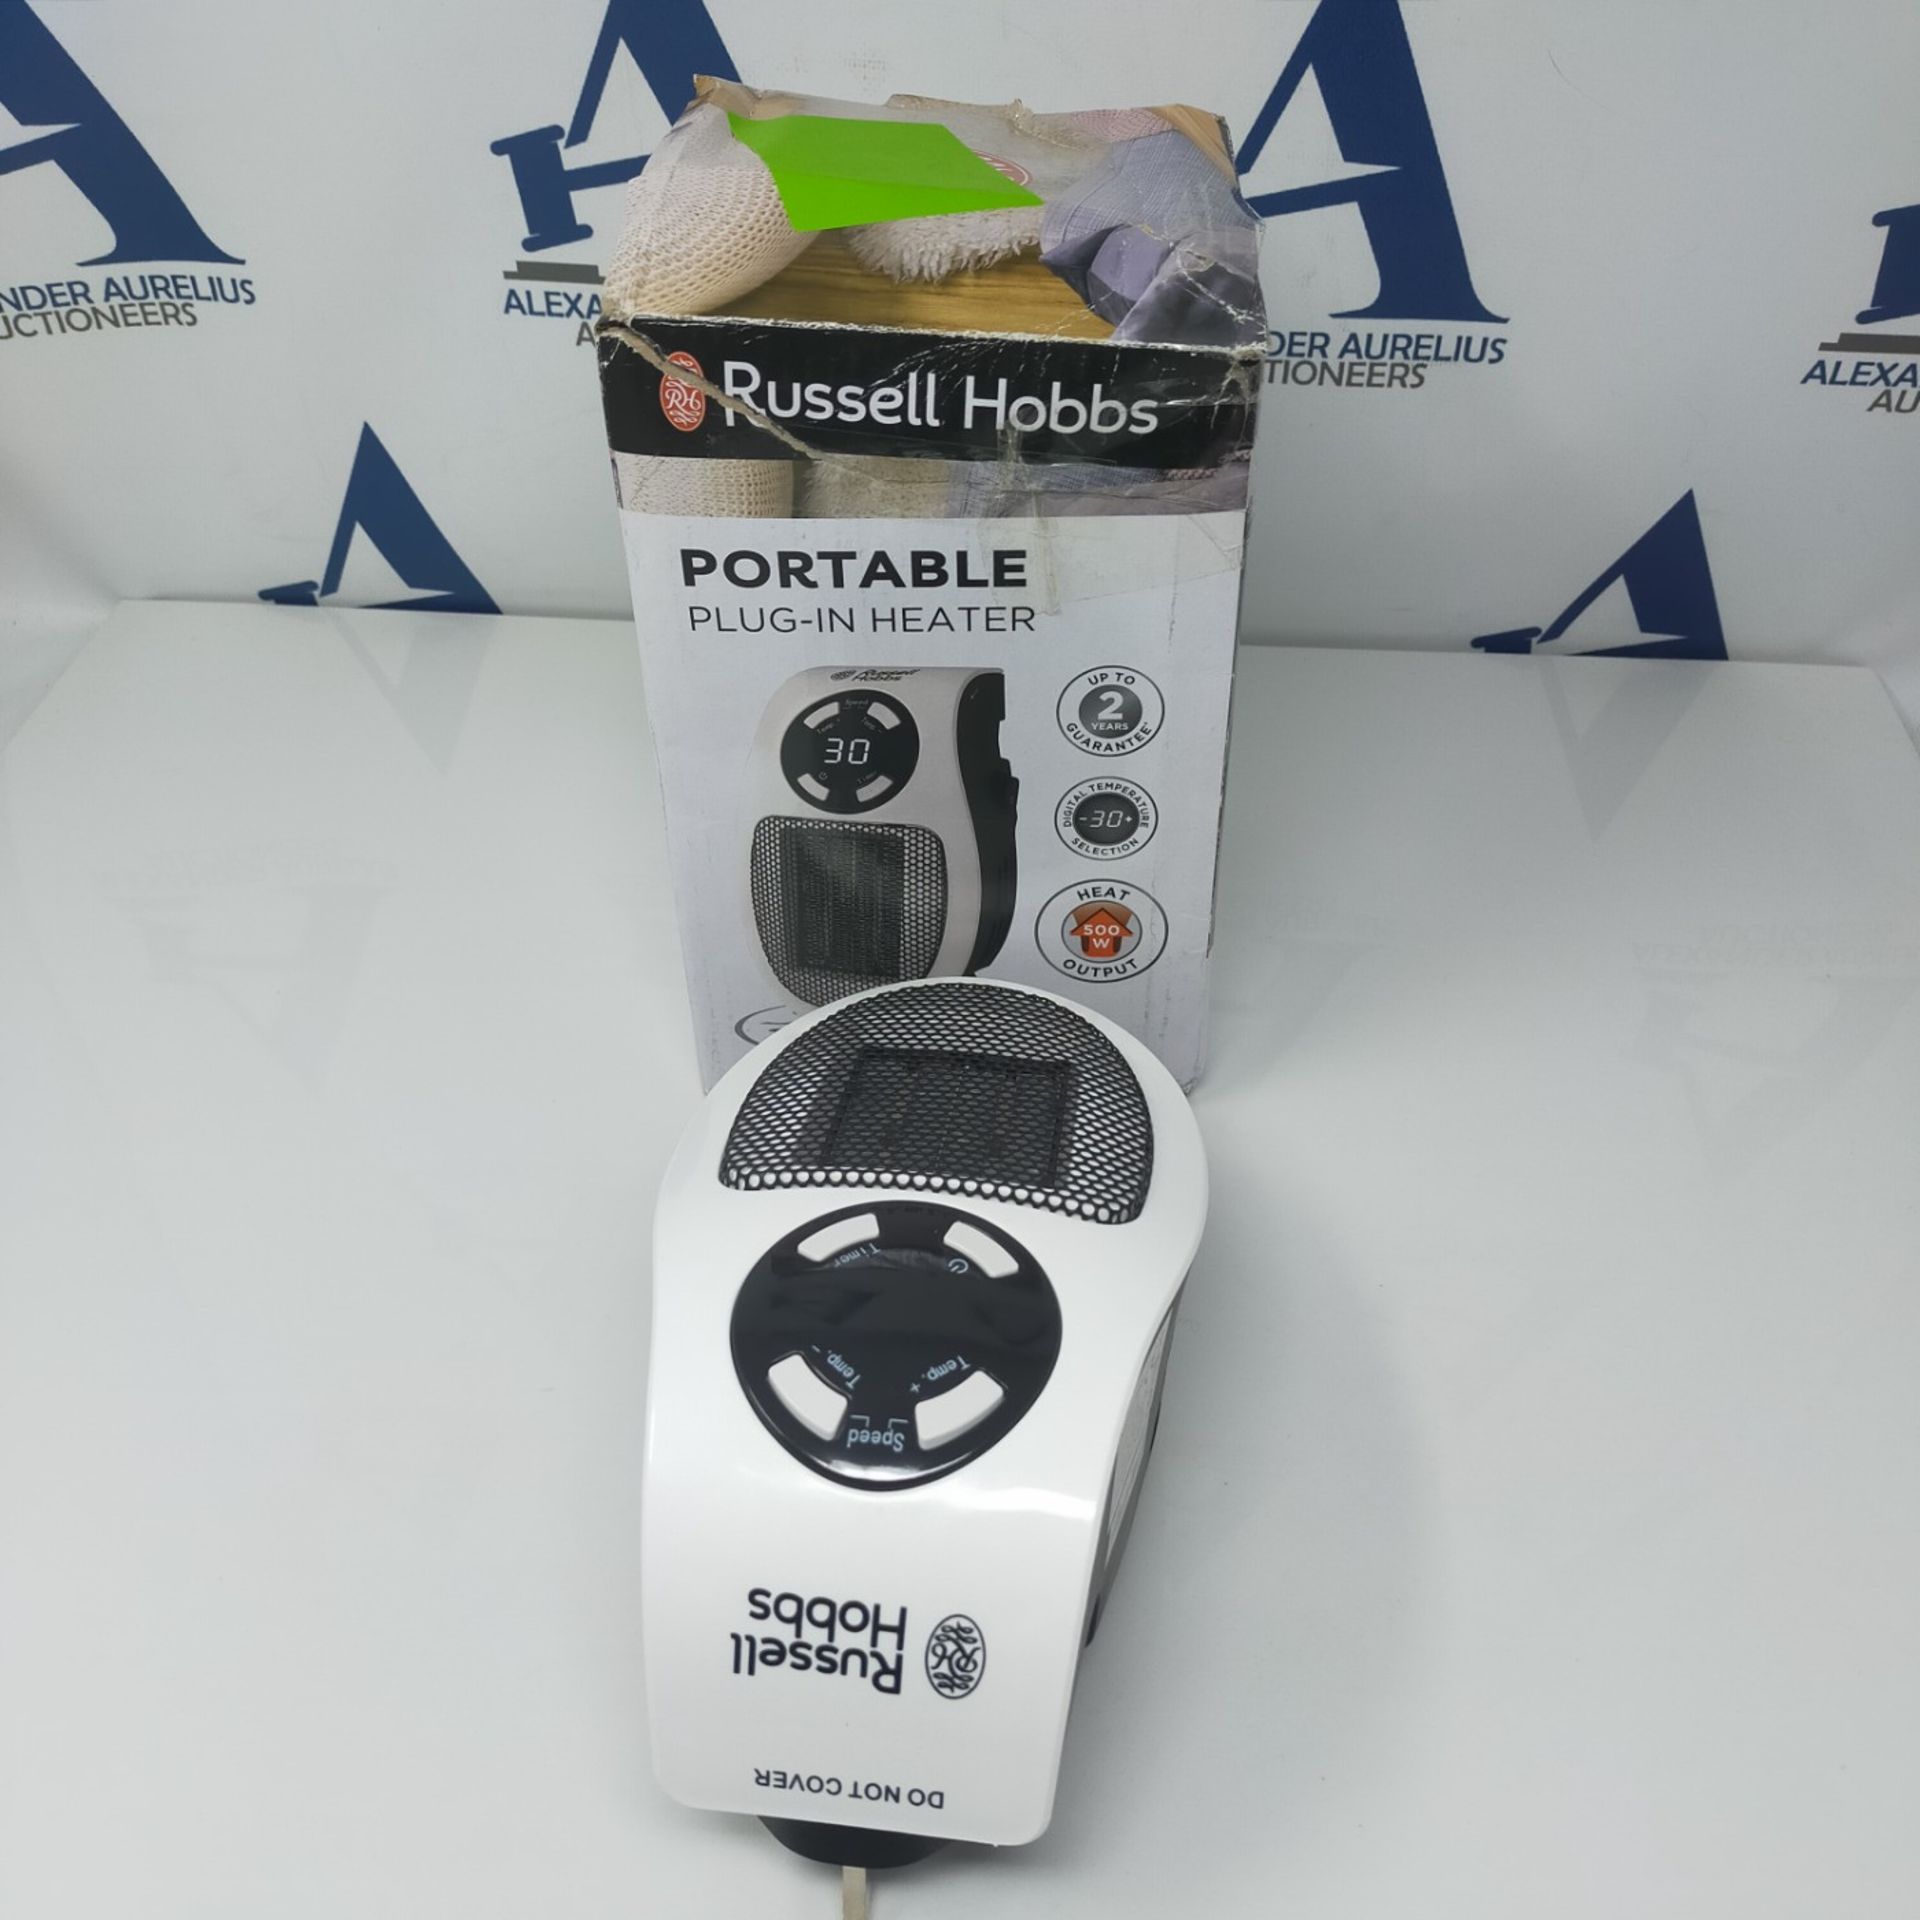 Russell Hobbs RHPH2001 500W Ceramic Plug Heater, Adjustable thermostat, 12 Hour Timer - Bild 2 aus 3